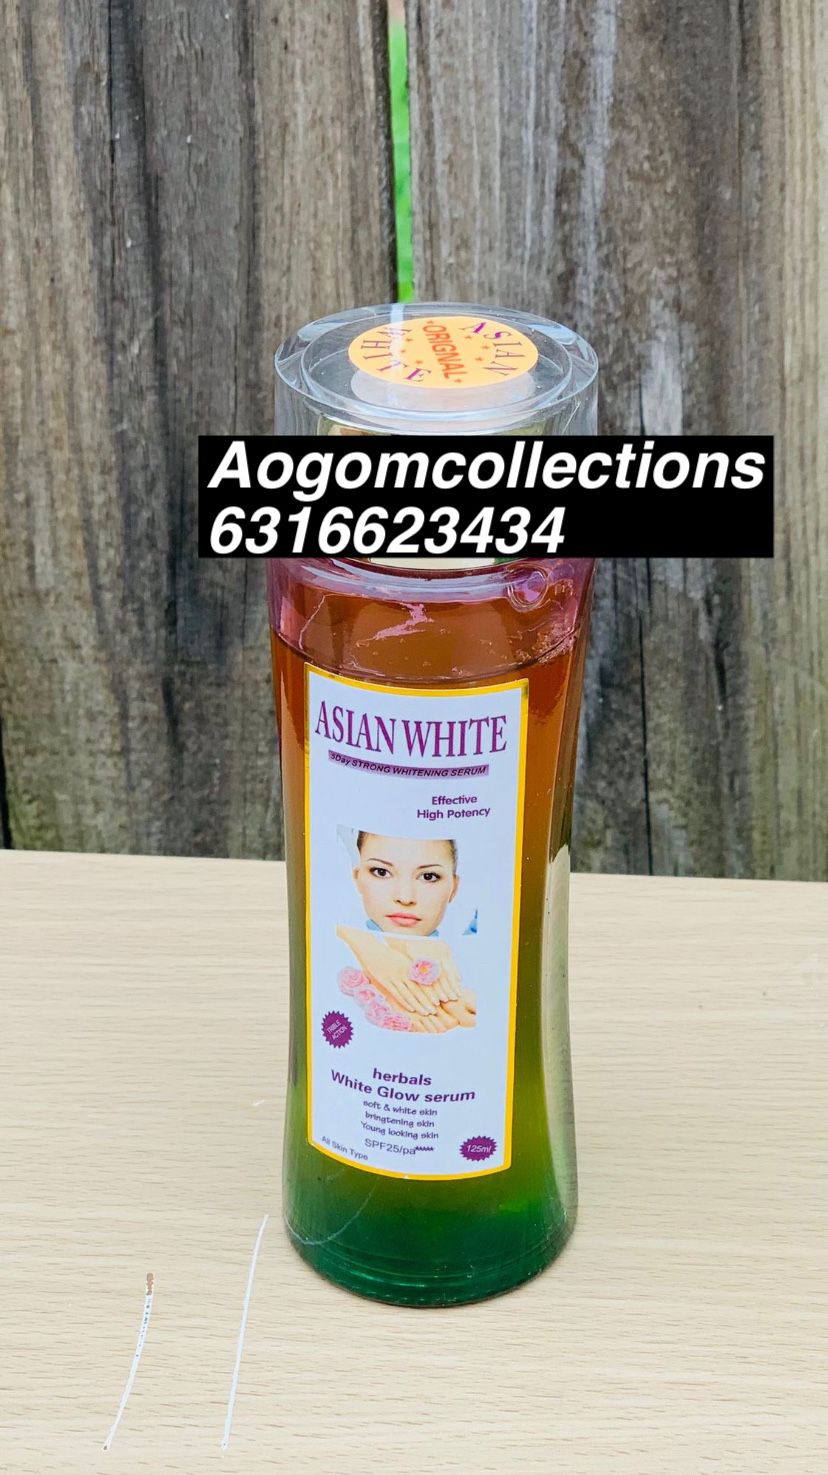 Asian white effective herbal white glow strong serum 